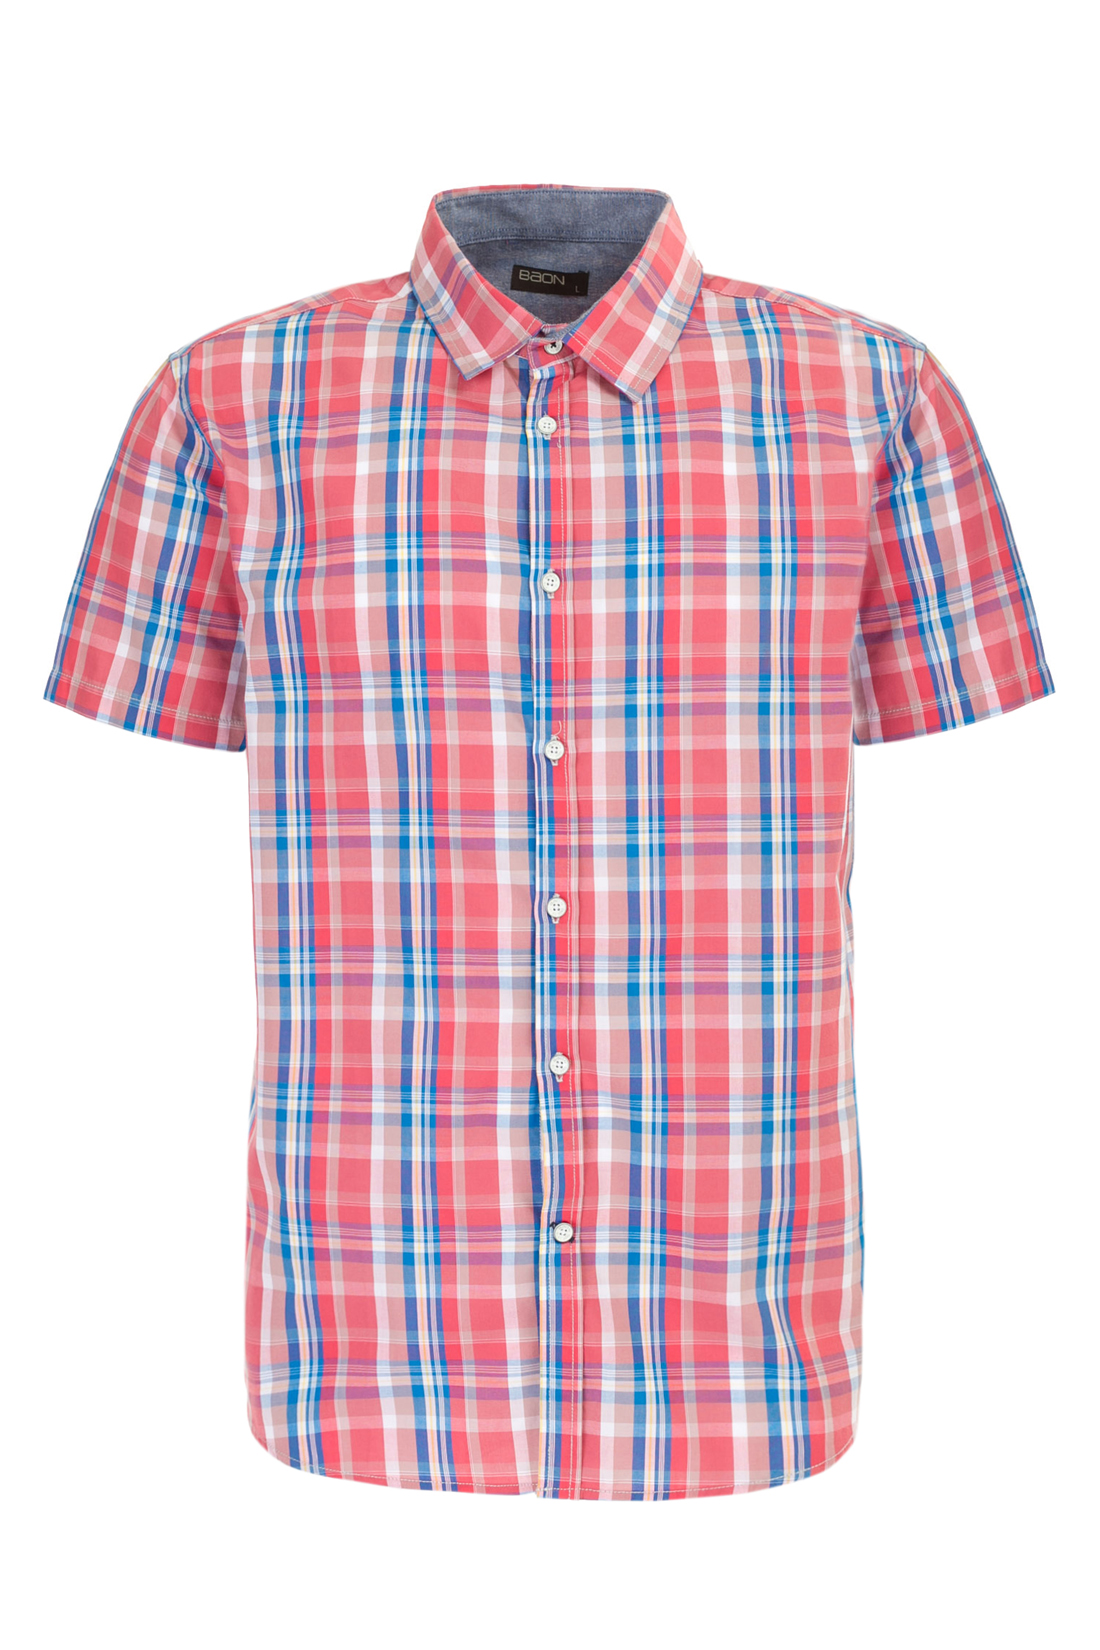 Рубашка в яркую клетку (арт. baon B687008), размер S, цвет розовый Рубашка в яркую клетку (арт. baon B687008) - фото 4